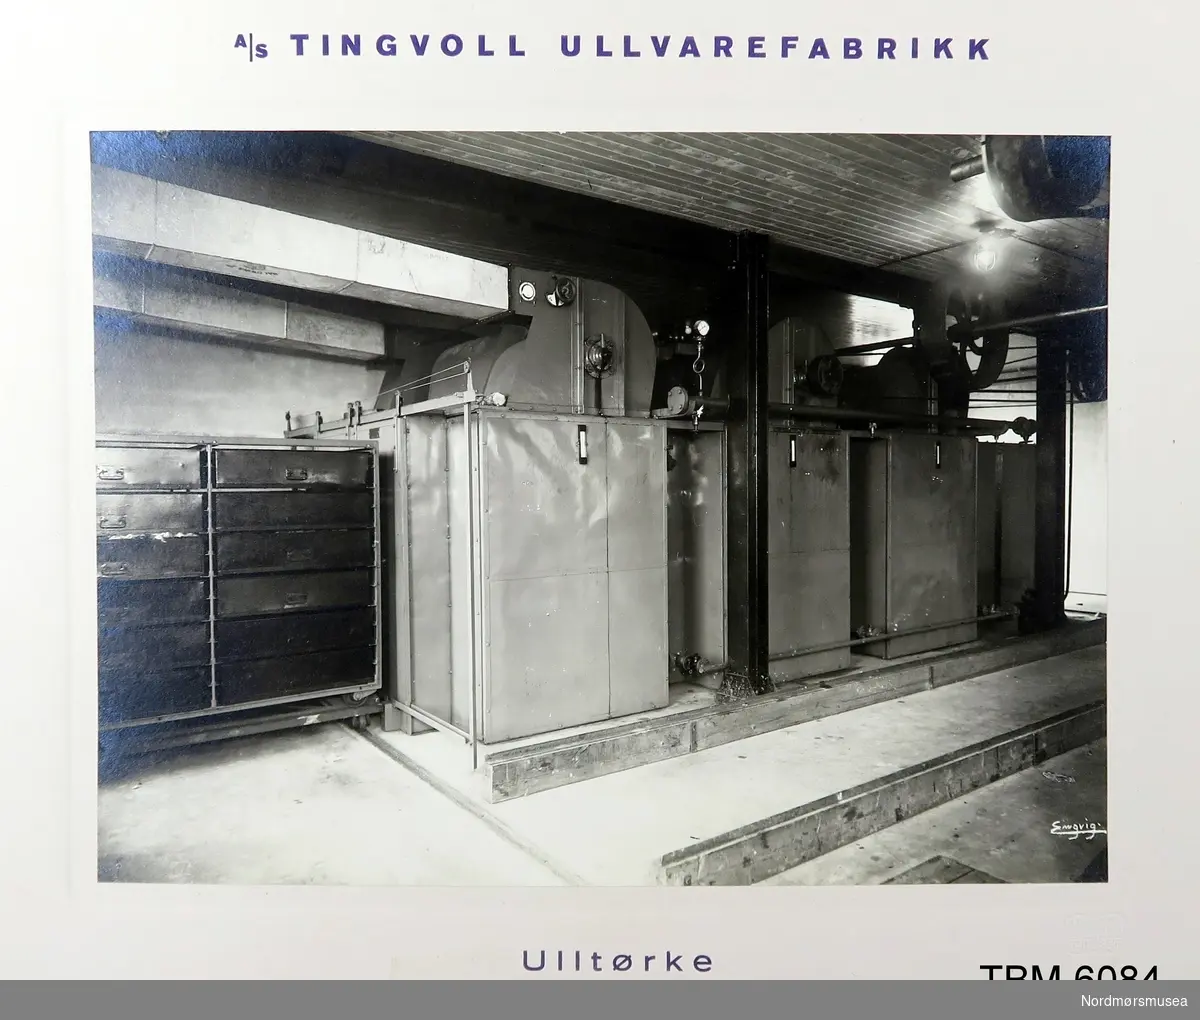 Fire fotografi på kartong av interiør på Tingvoll Ullvarefabrikk.
Bilda er tatt av J.O. Engvig, Kristiansund